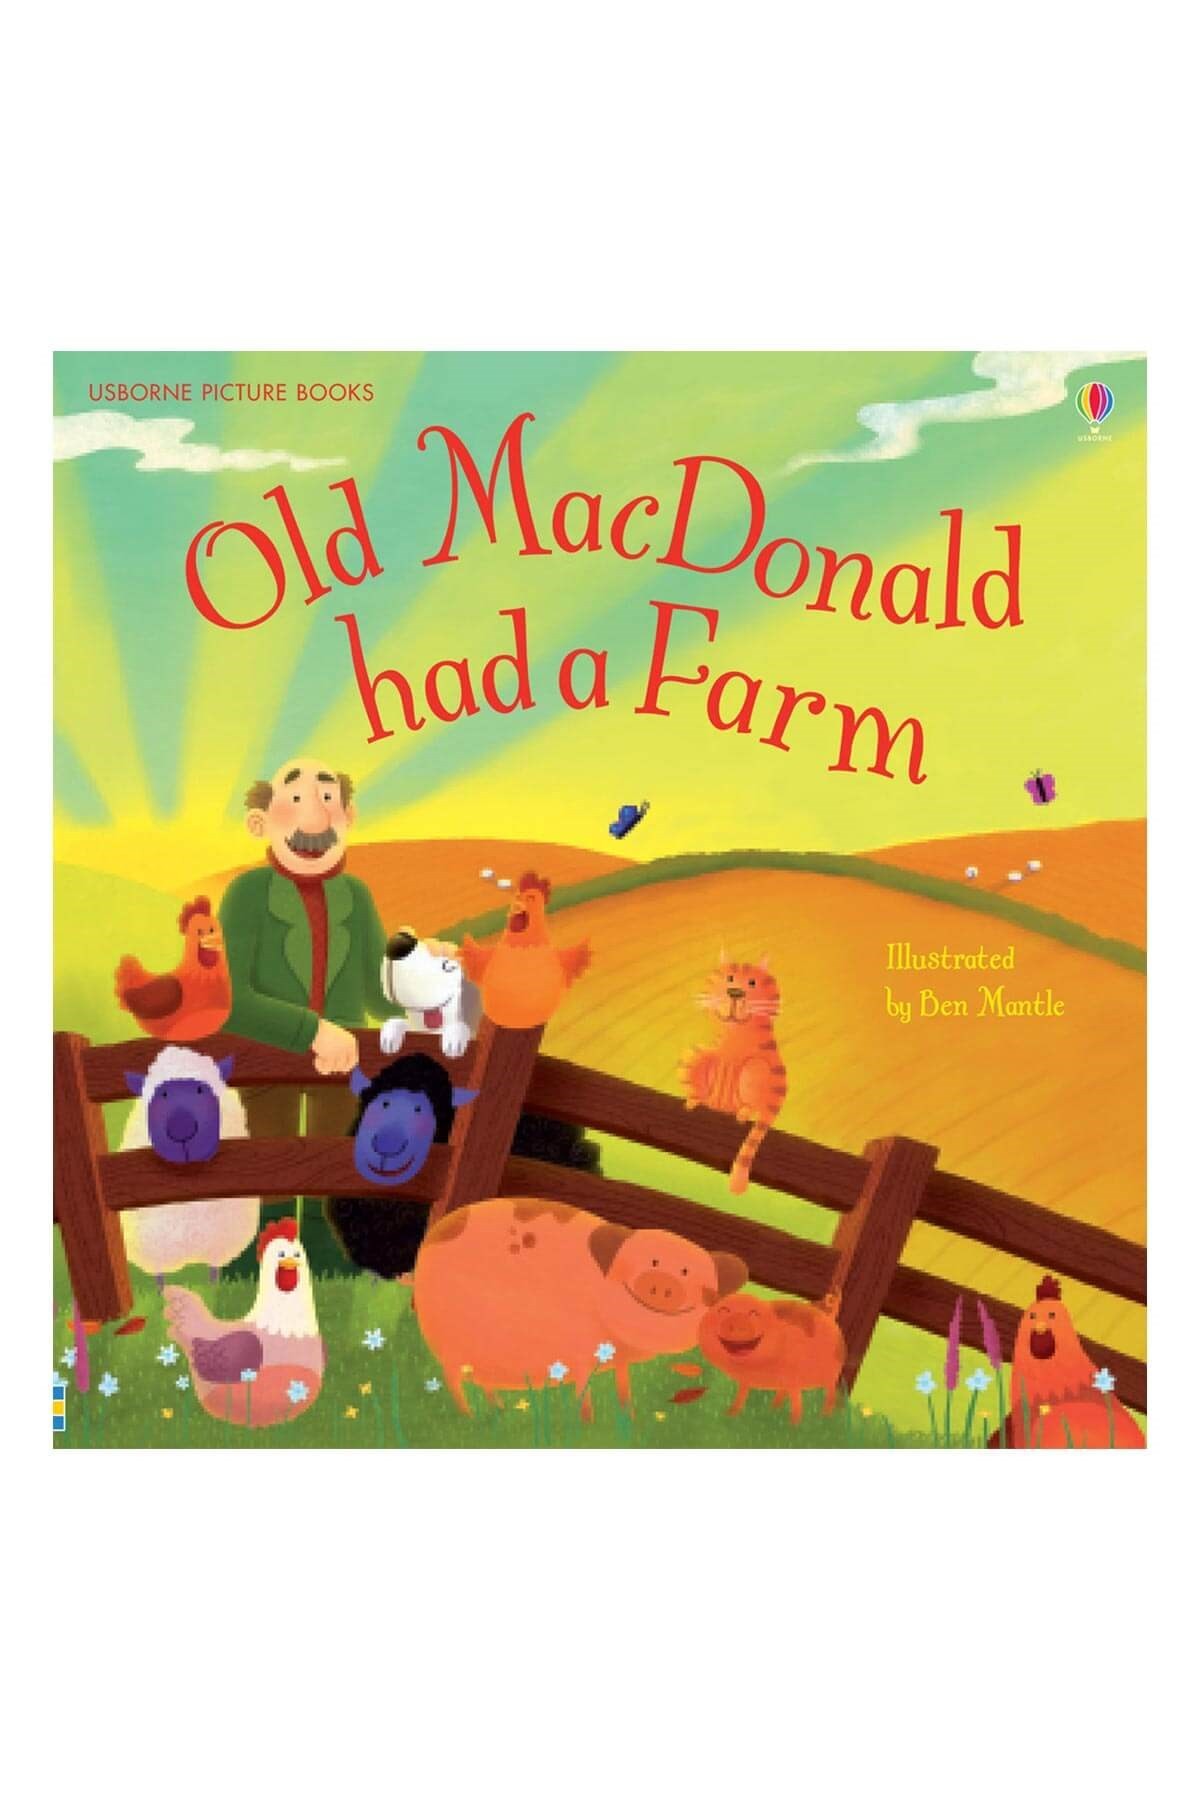 The Usborne Old Macdonald Had A Farm